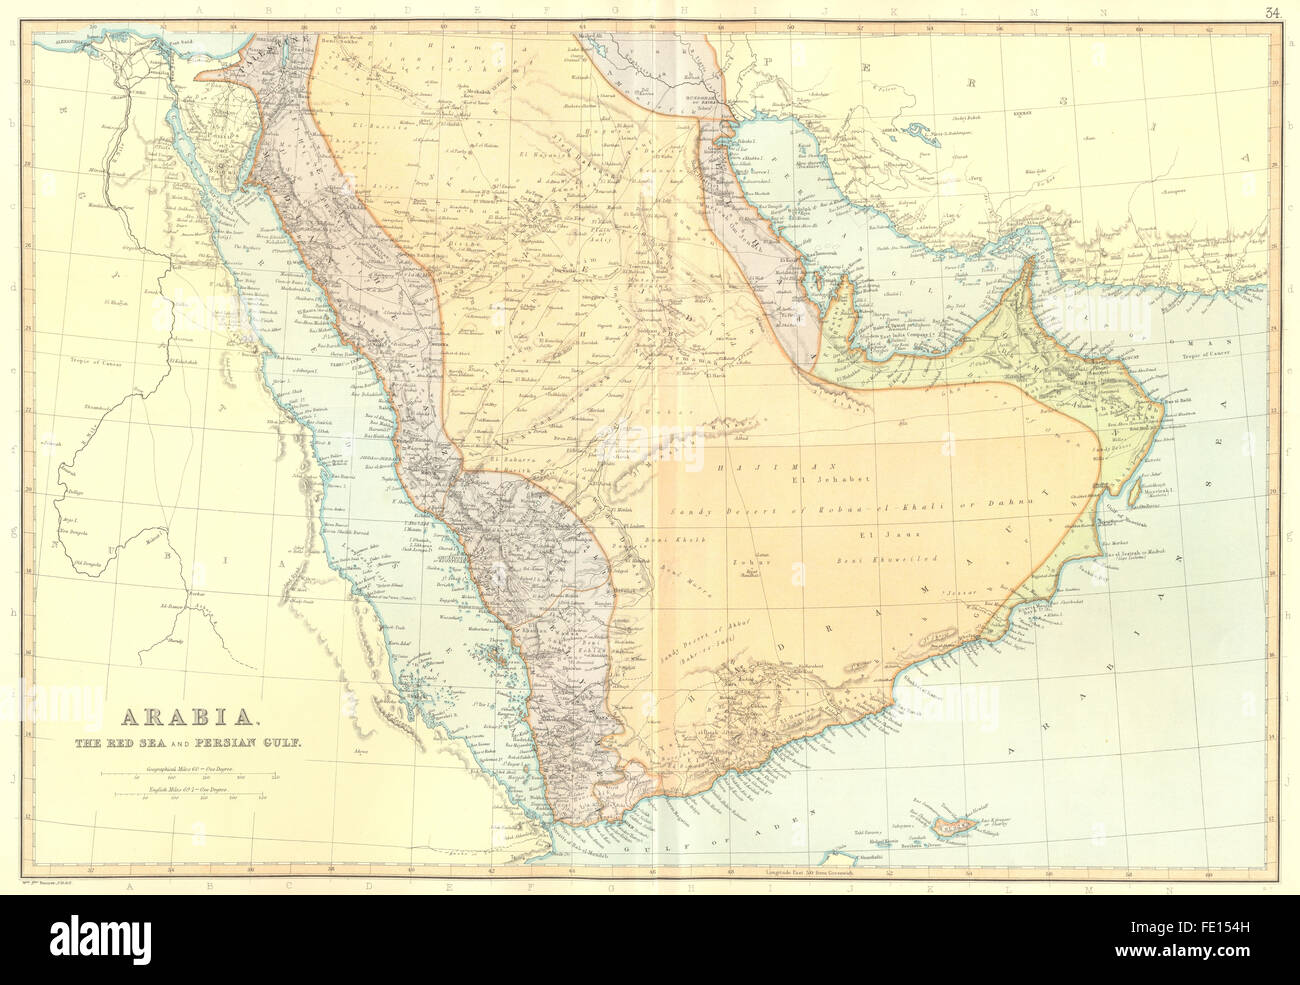 L Arabie La Mer Rouge Et Du Golfe Persique Aden Oman Qatar Arabie Saoudite Emirats Arabes Unis Blackie 13 Map Photo Stock Alamy